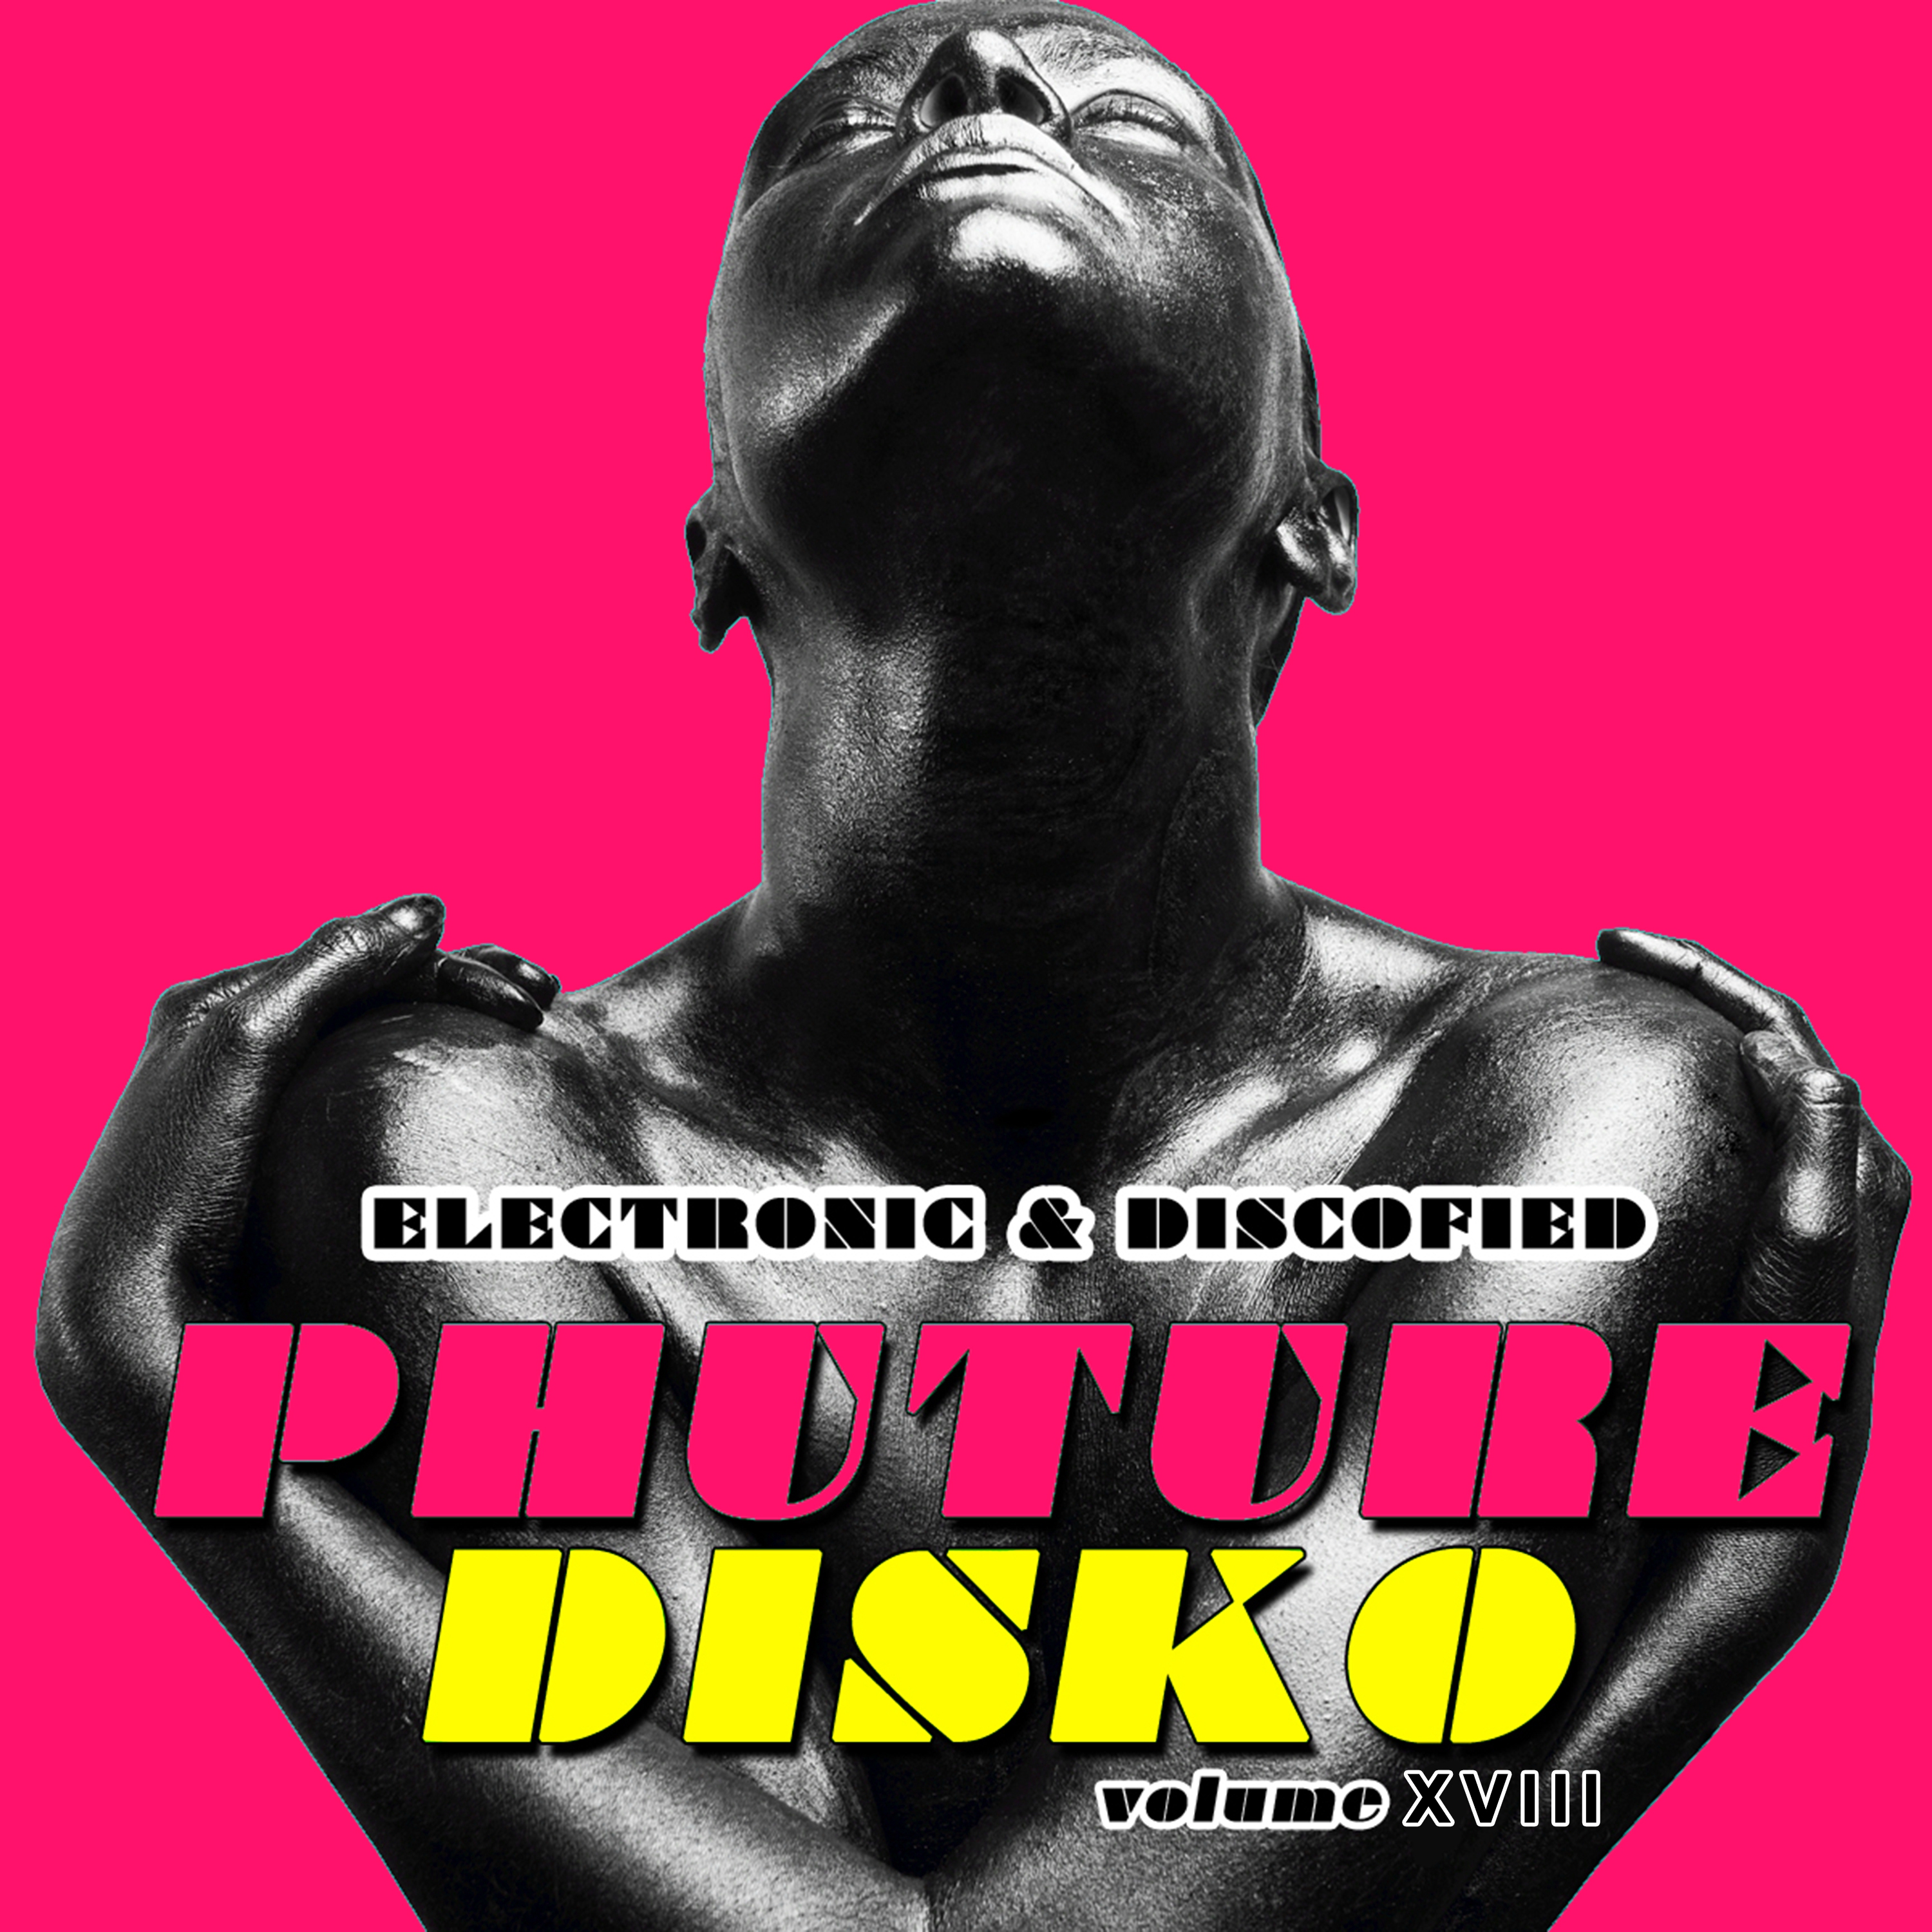 Phuture Disko, Vol. 18 - Electronic & Discofied